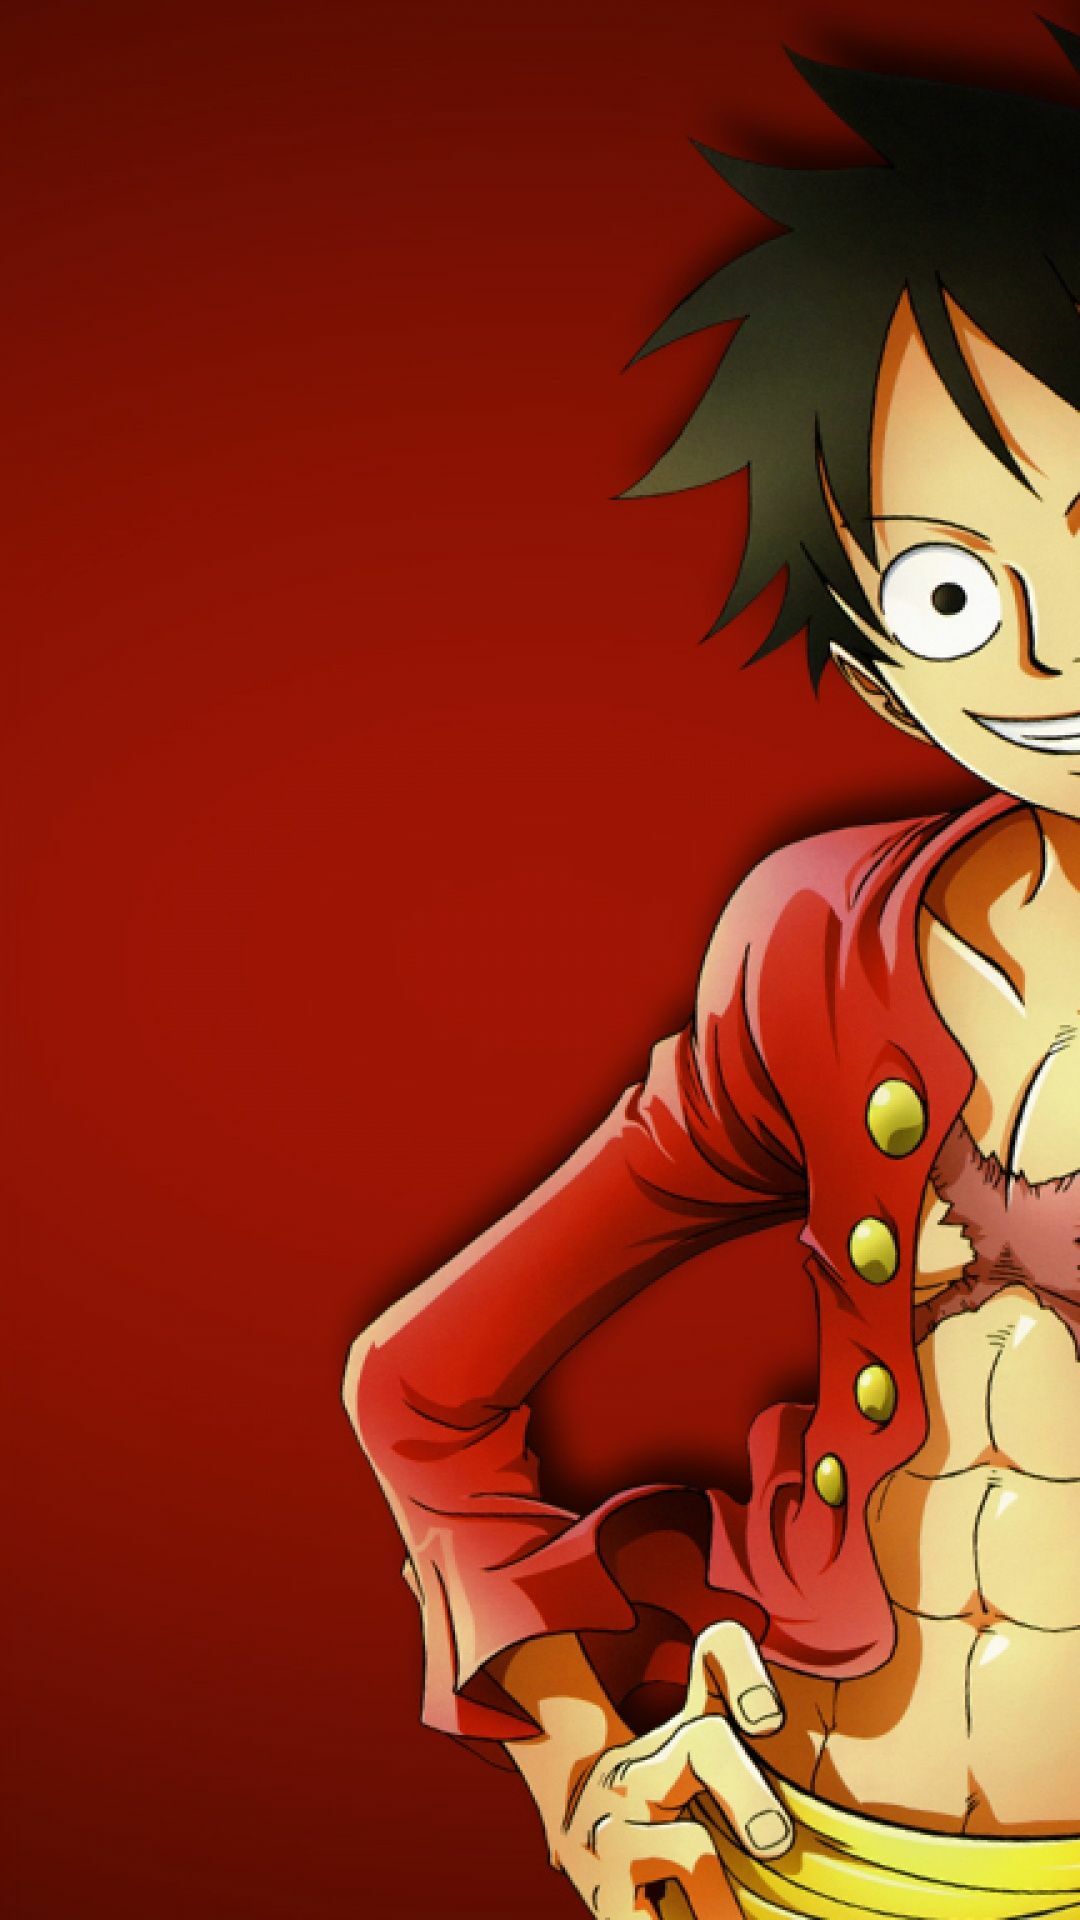 35 Gambar Wallpaper Hd Anime One Piece Android terbaru 2020